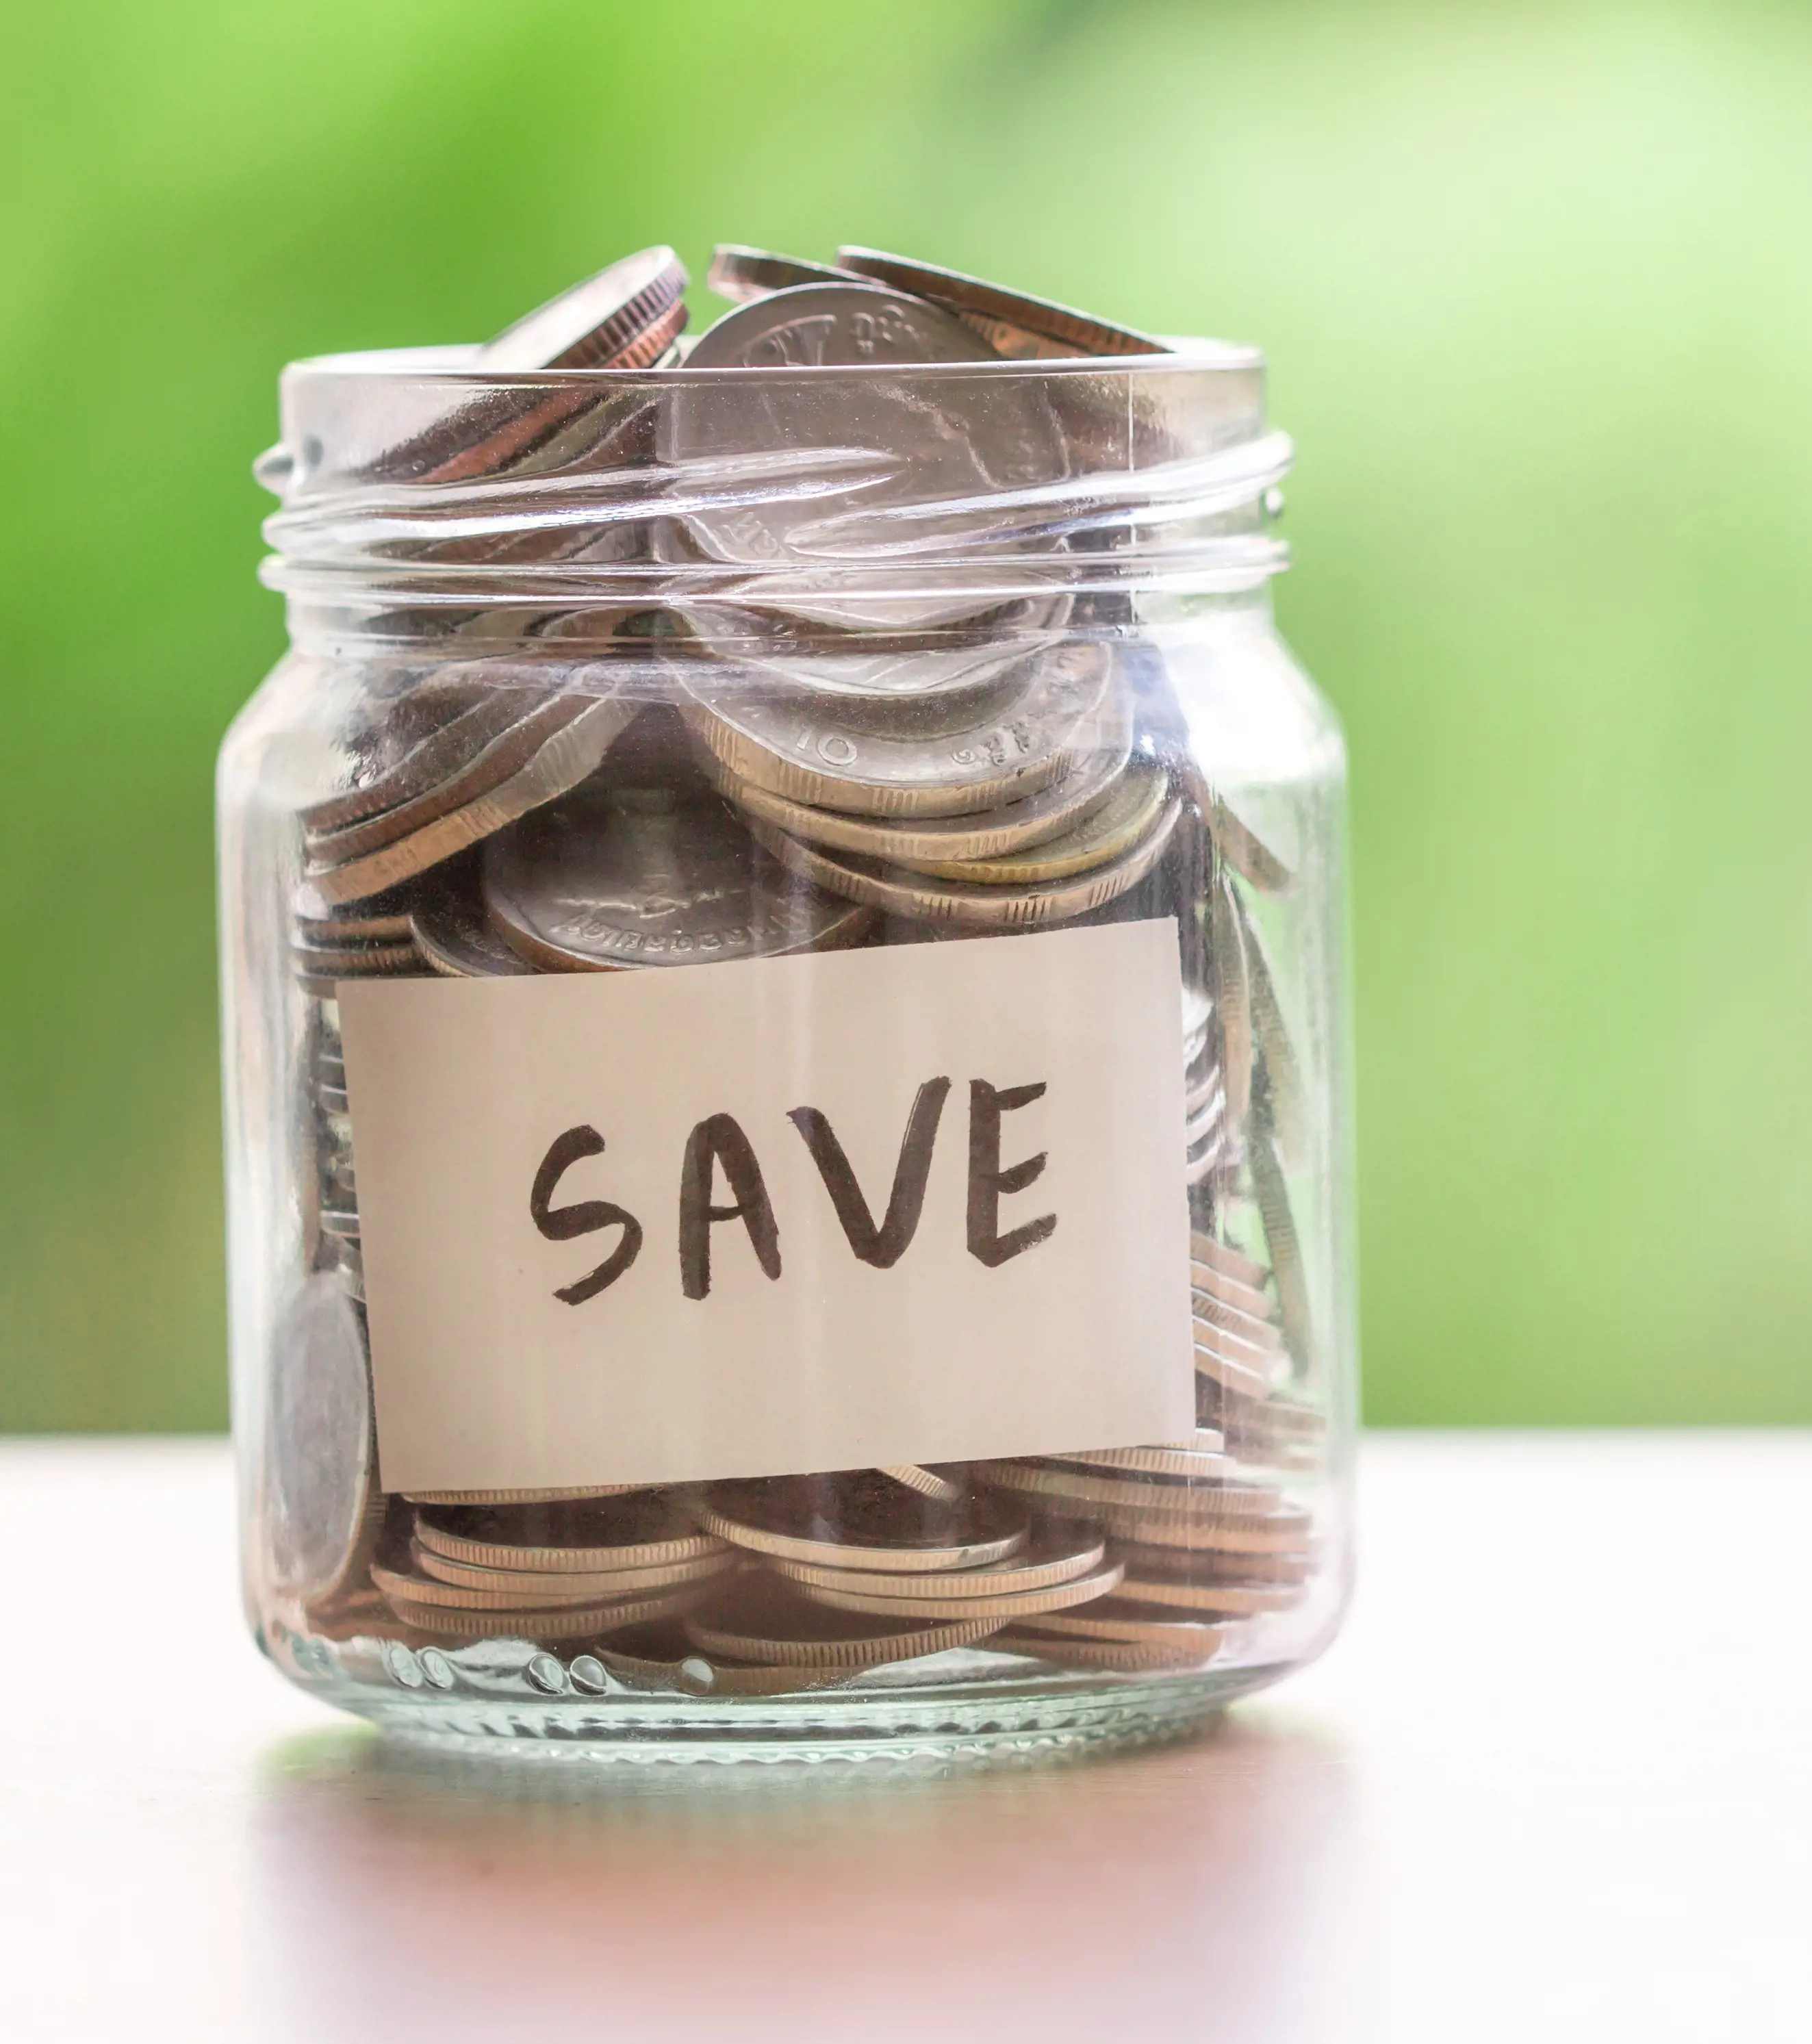 open-a-savings-account-statement-savings